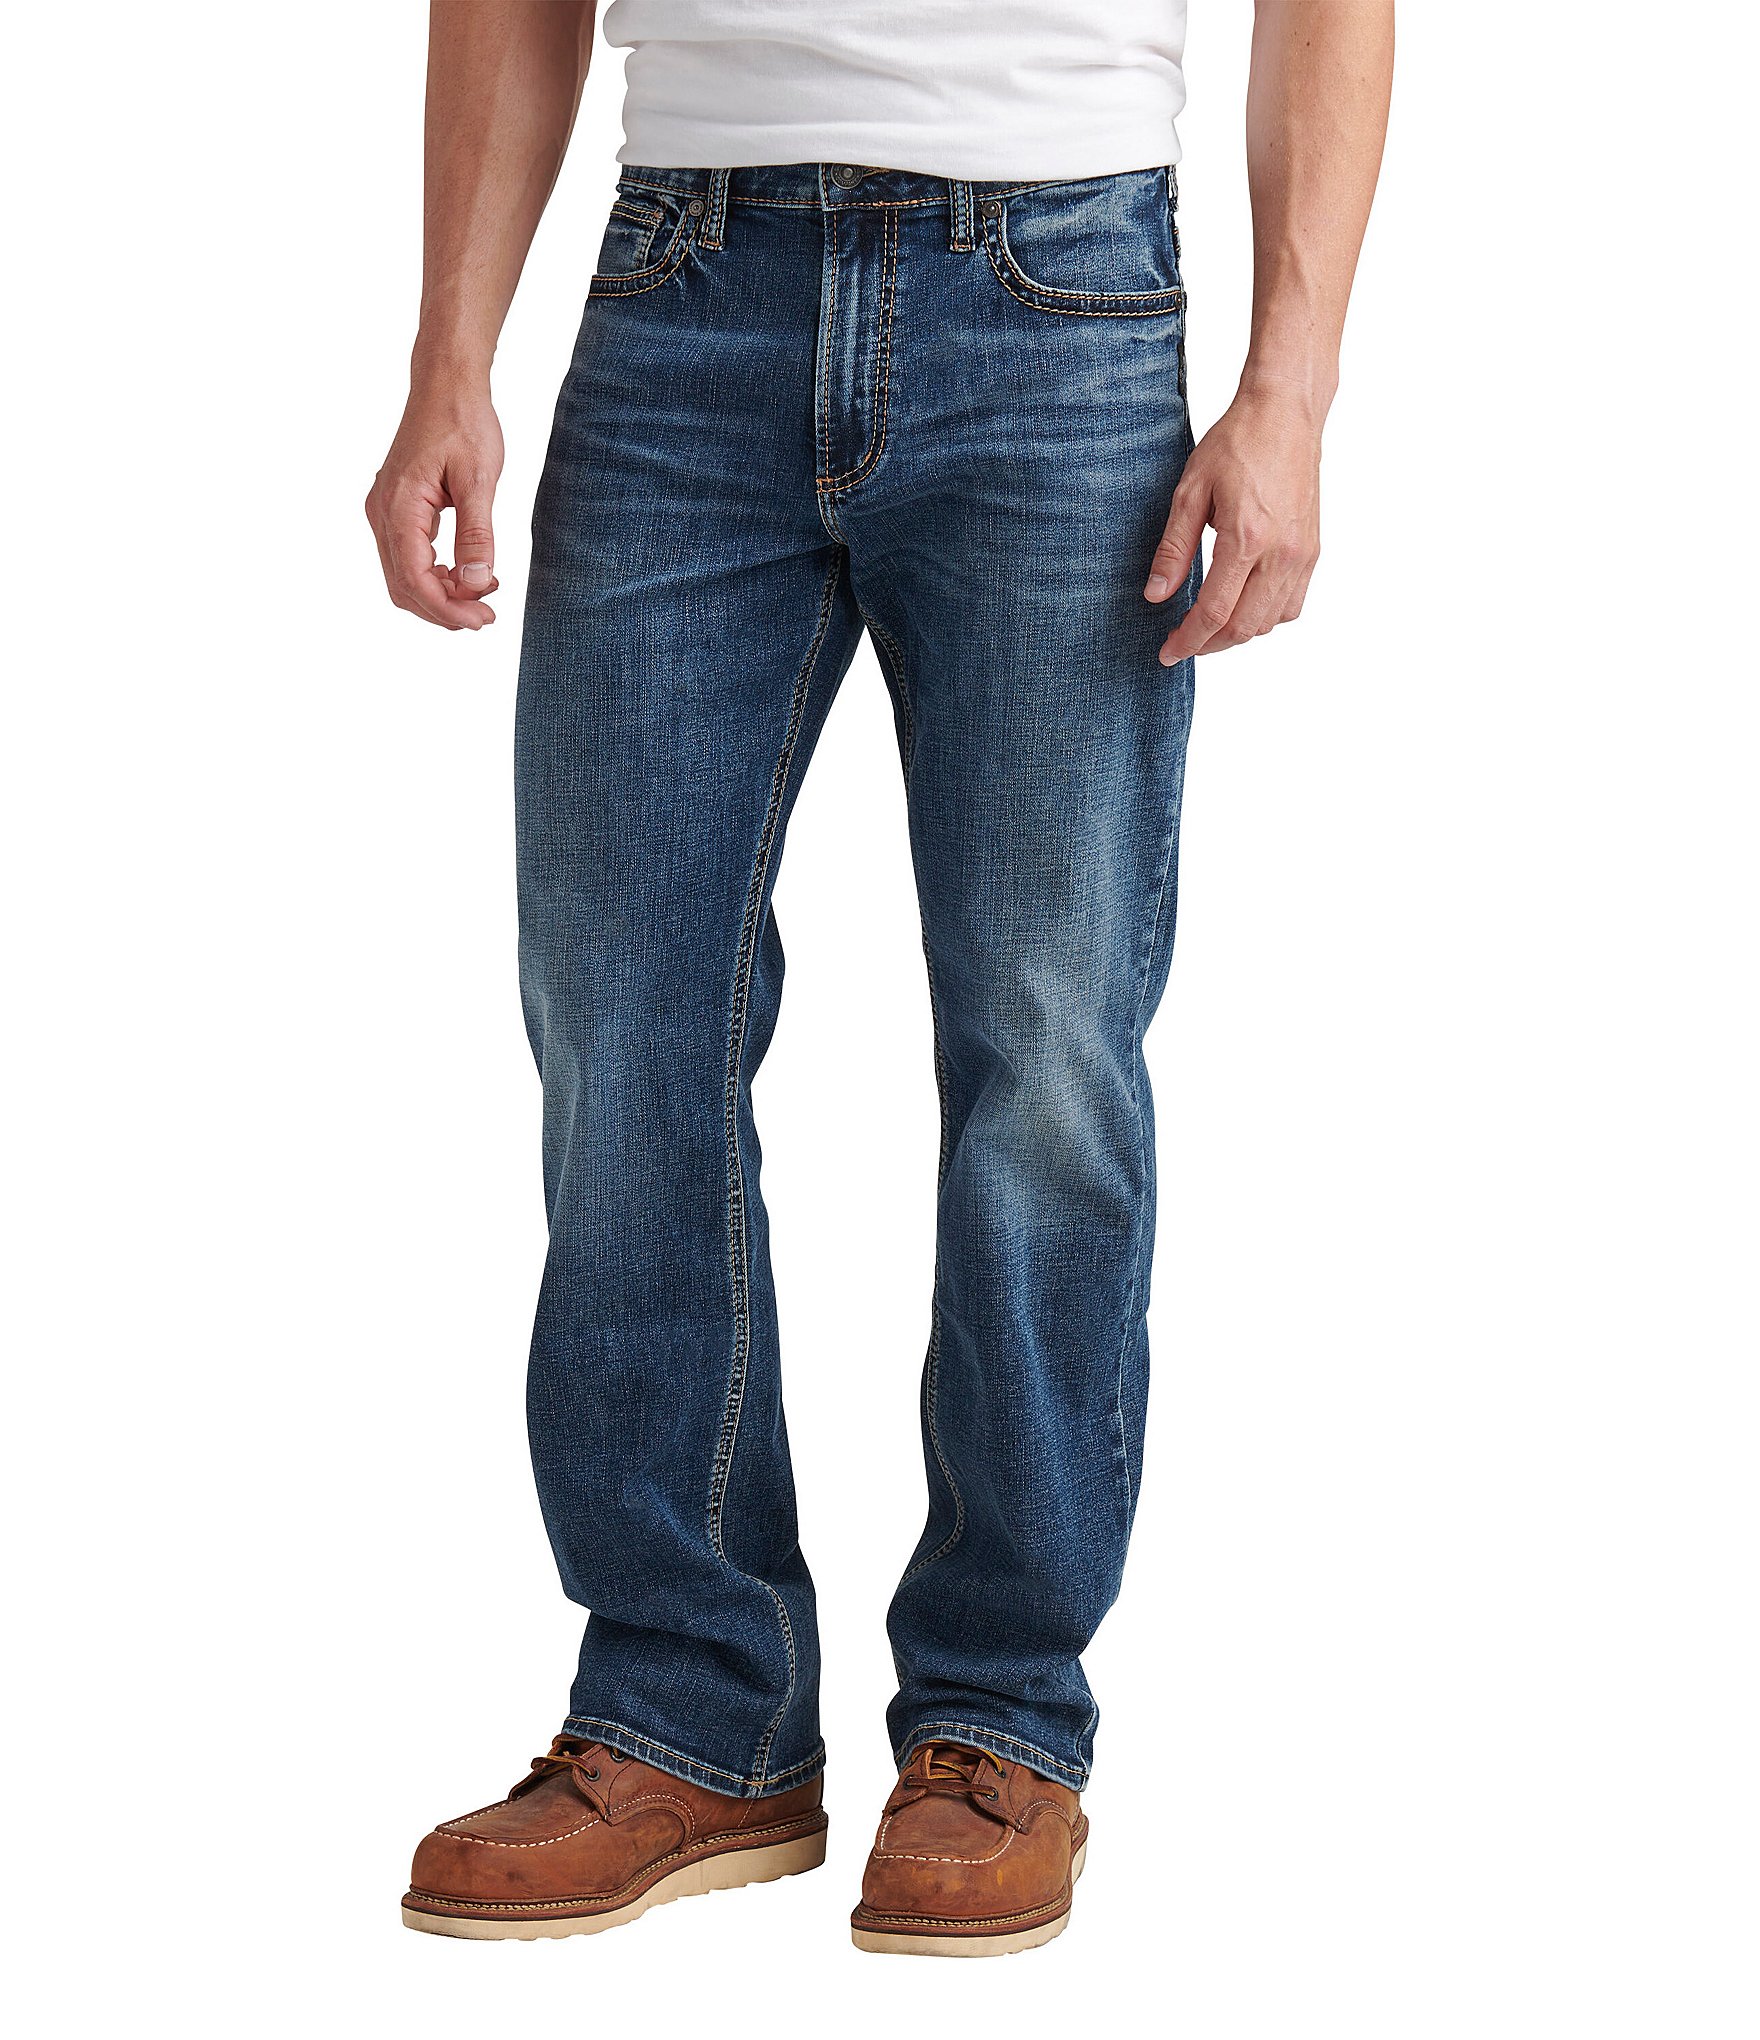 undergrundsbane sy inflation Silver Jeans Co. Gordie Loose Fit Straight Leg Dark Eco Washed Blue Jeans |  Dillard's